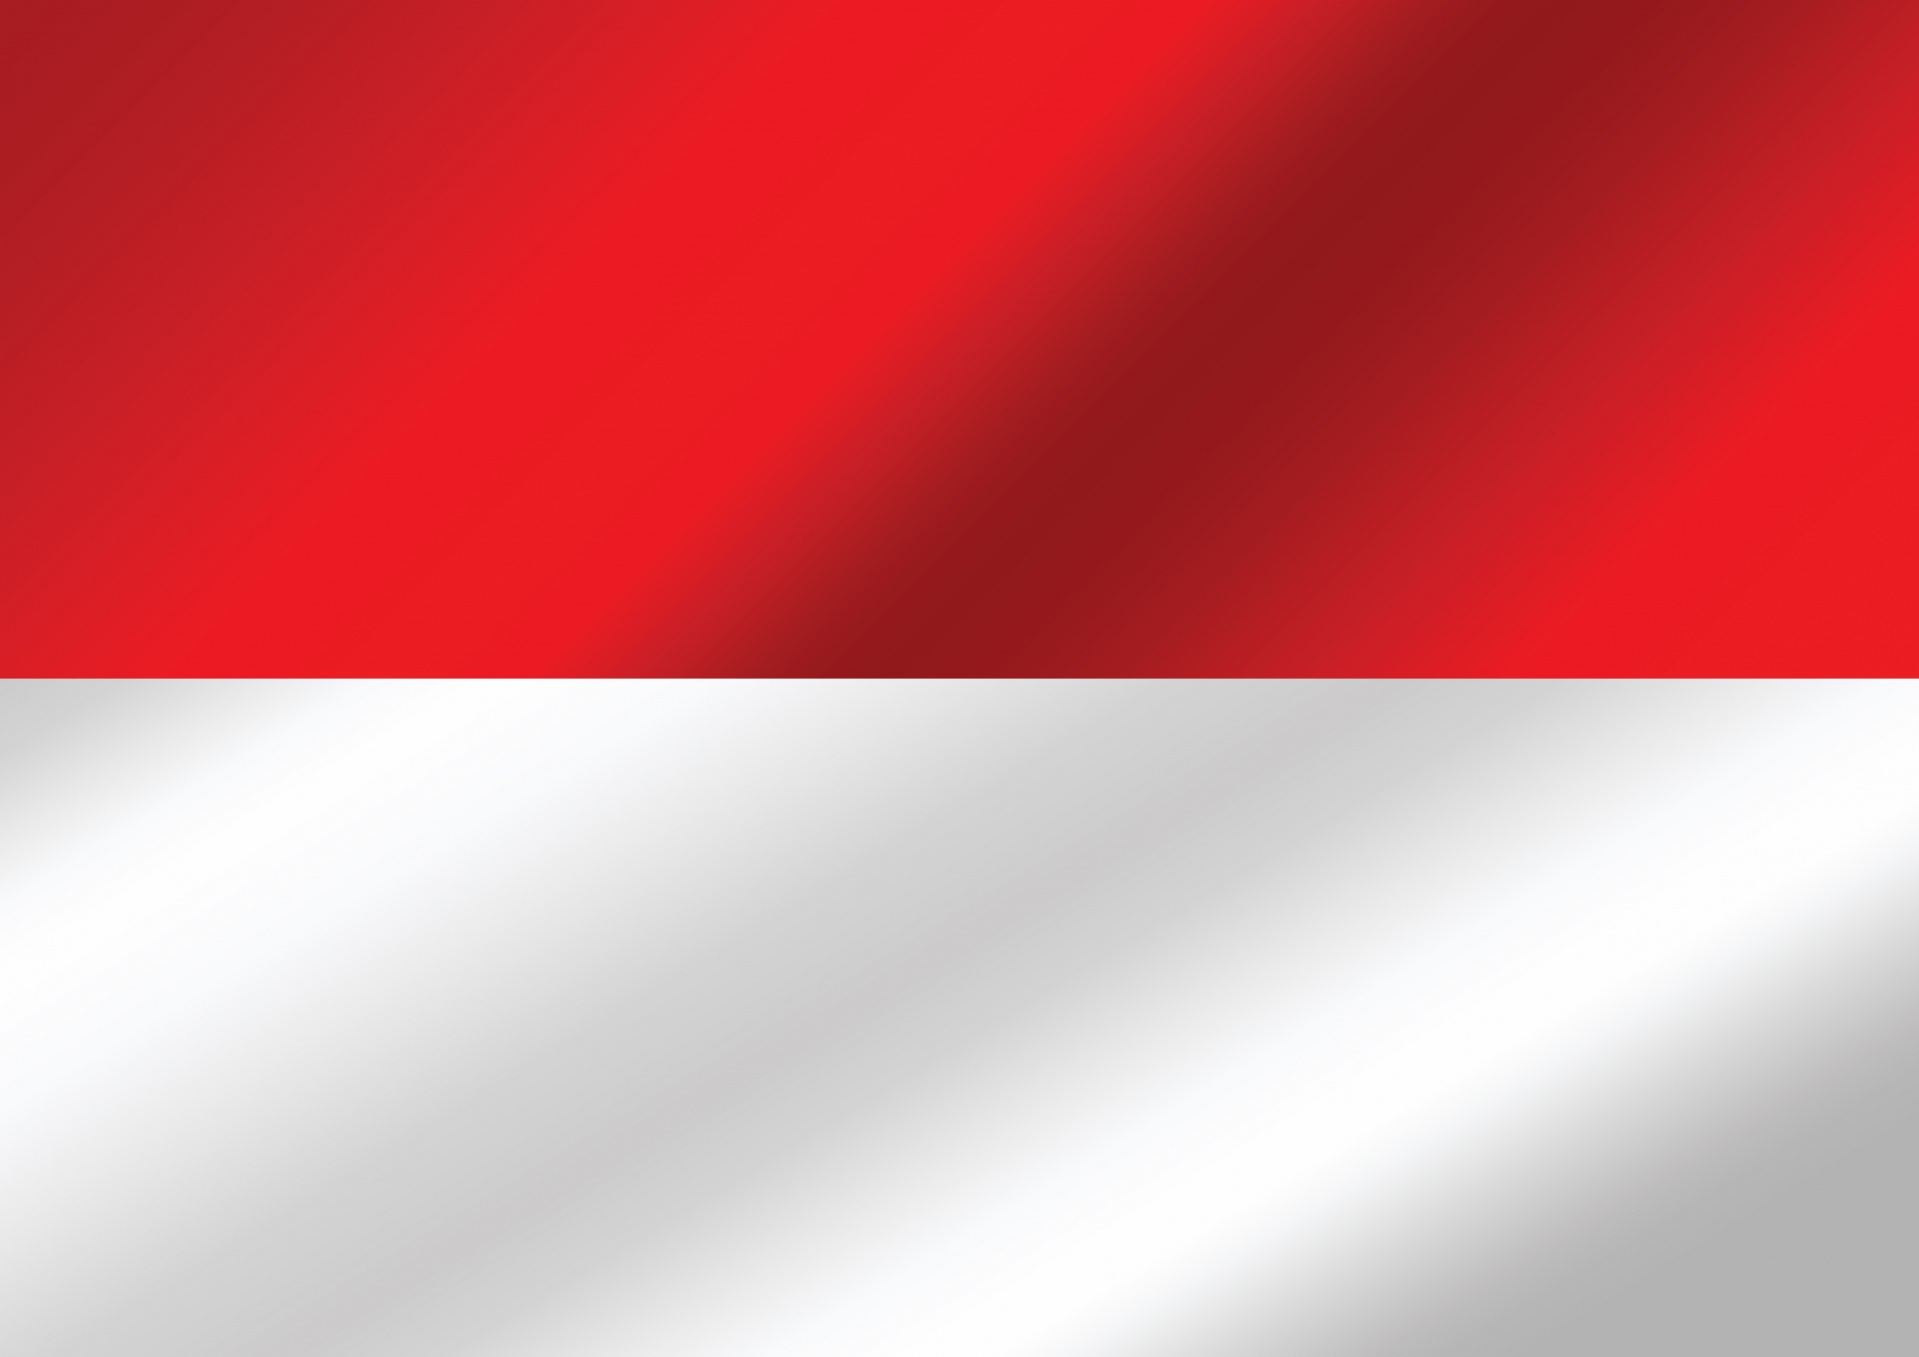 National Flag Of Monaco Themes